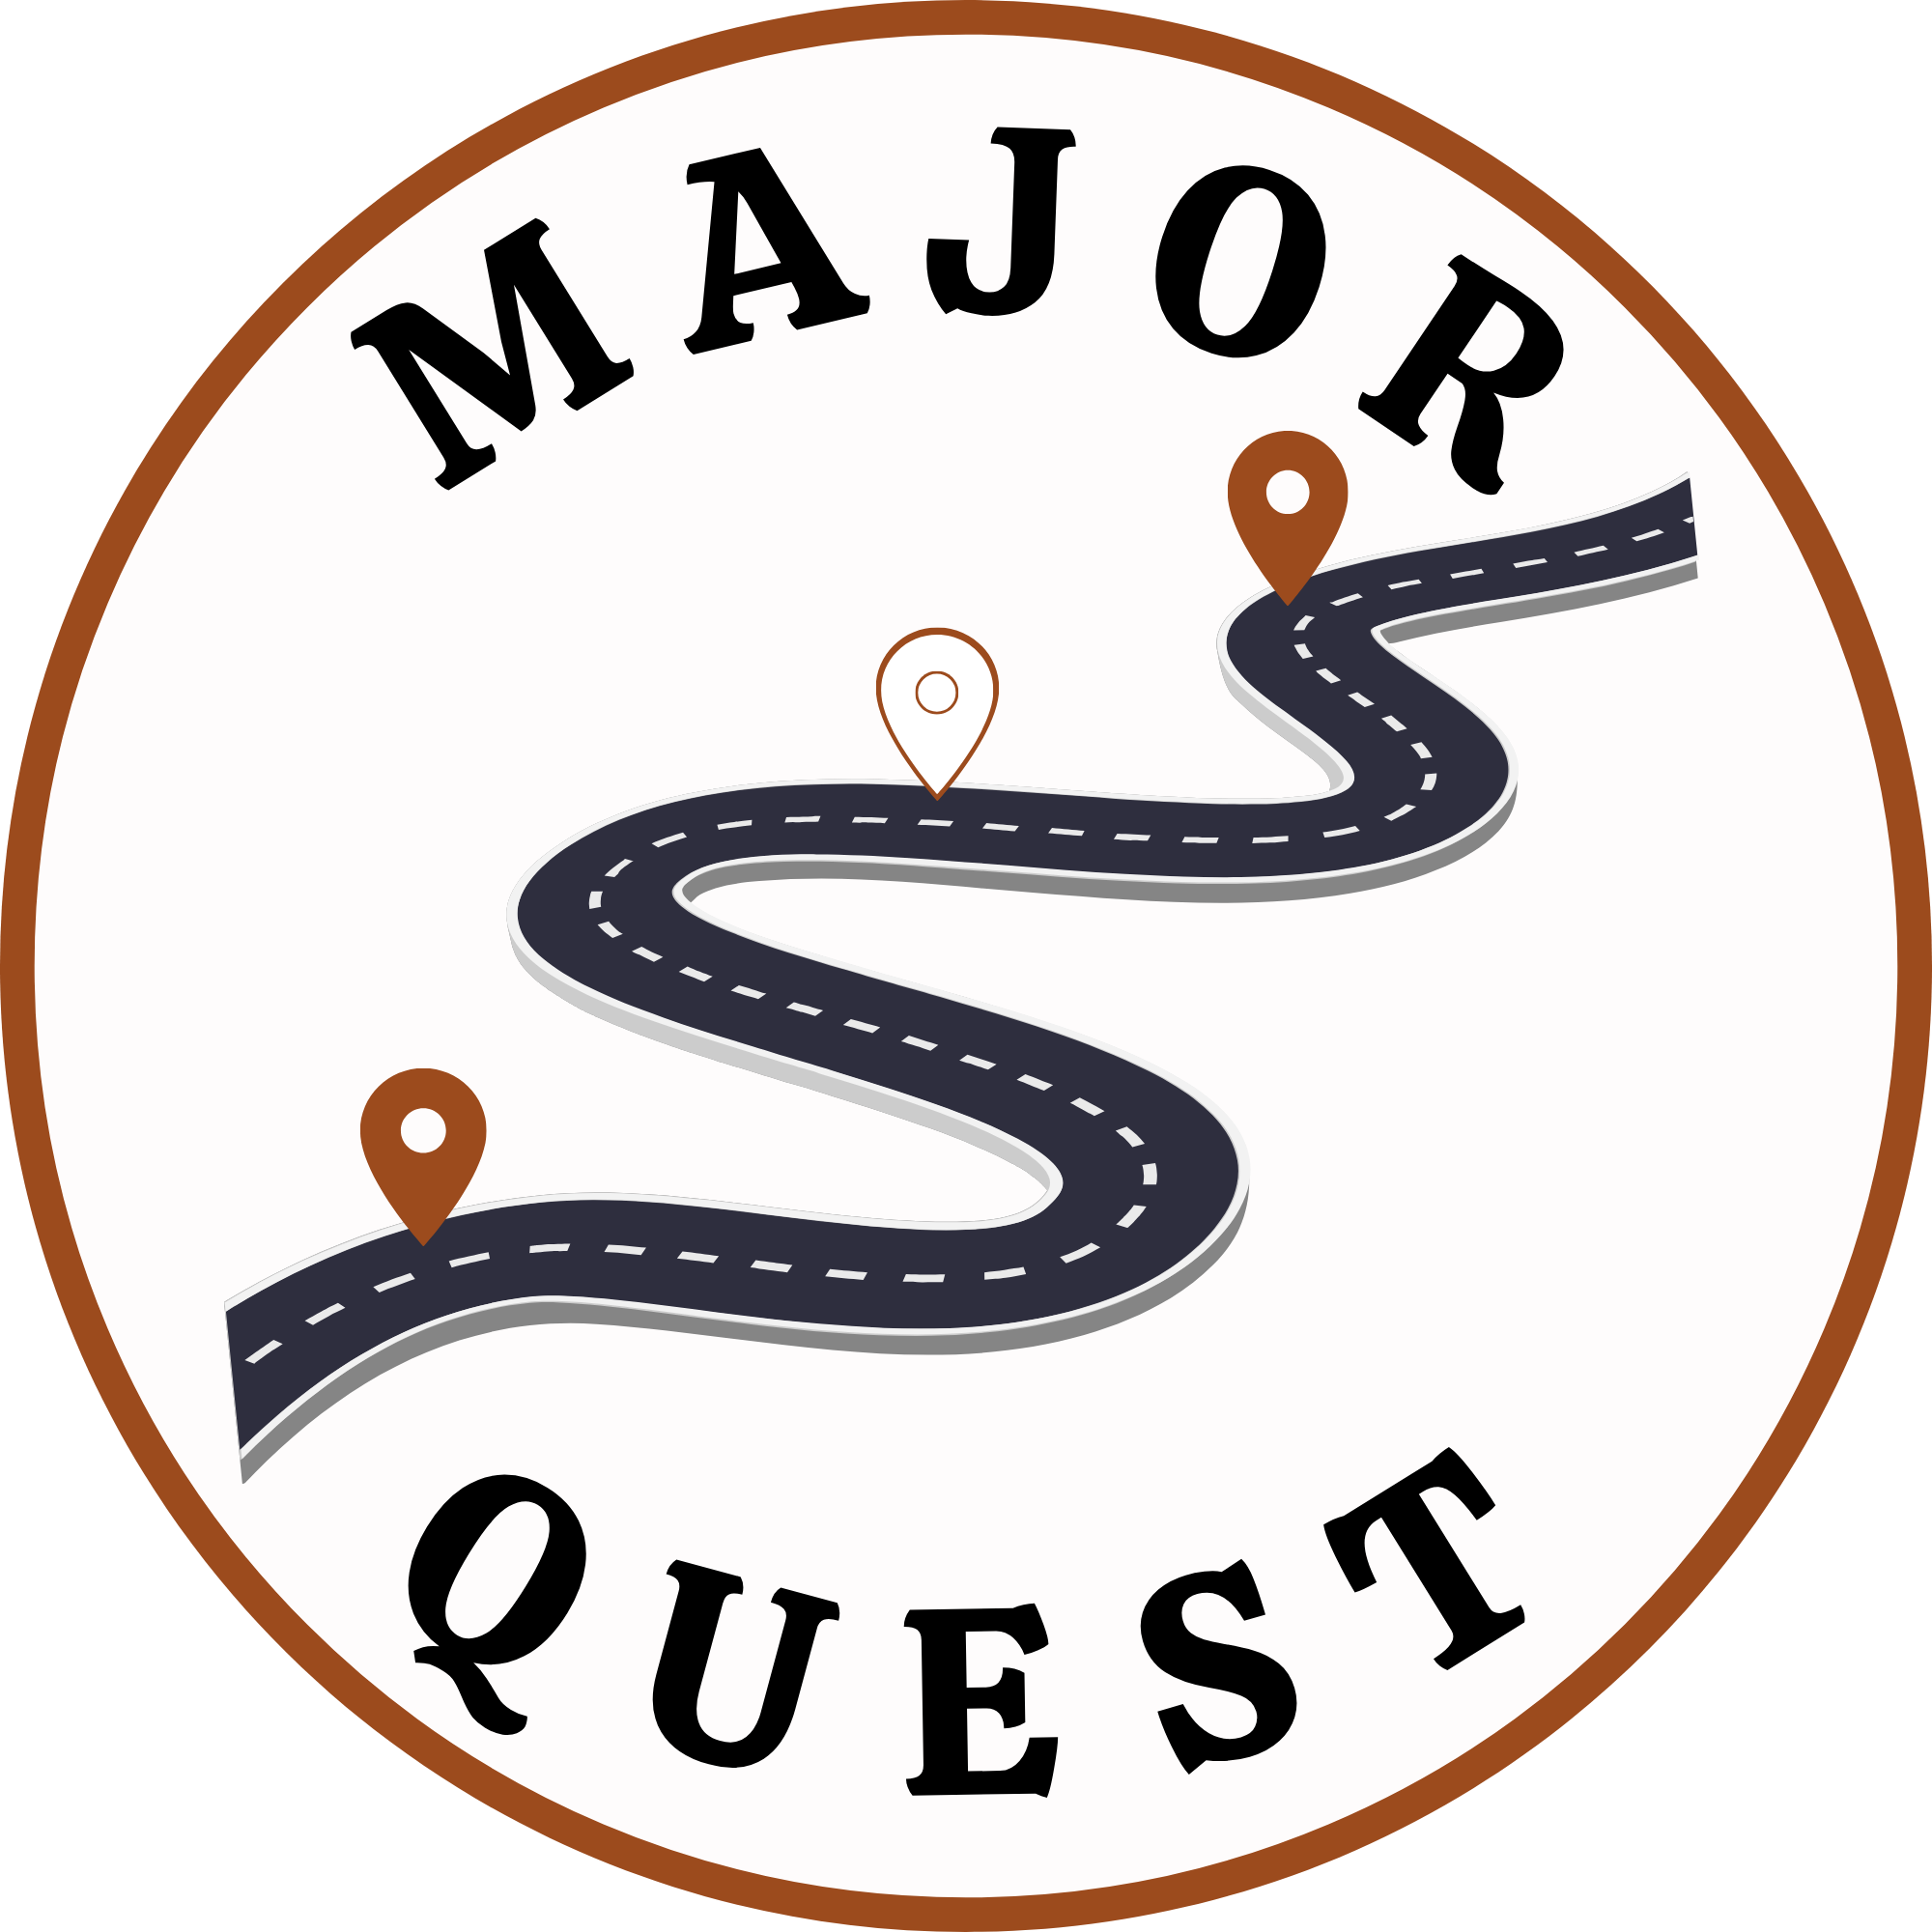 Major Quest round logo